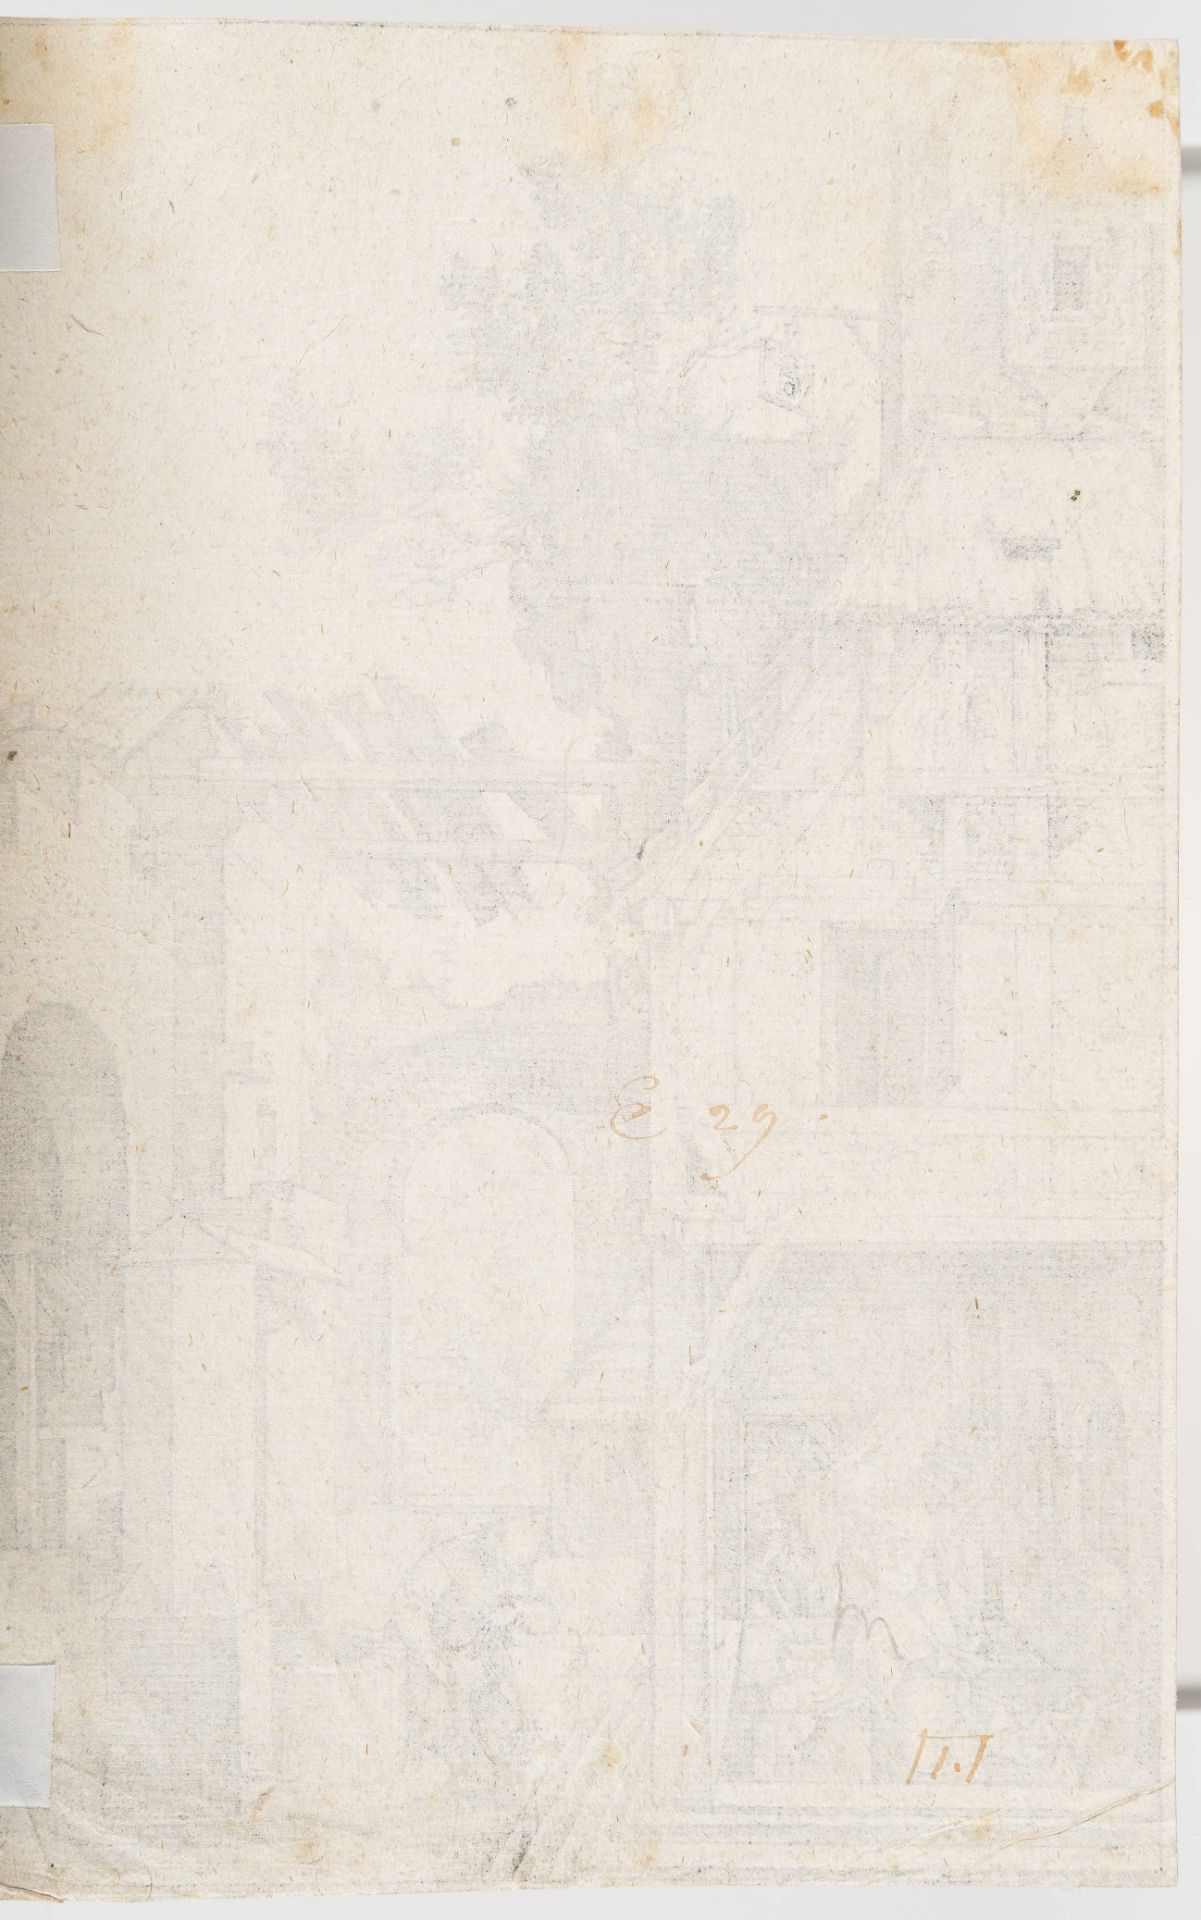 Albrecht Dürer – The nativity - Image 3 of 3